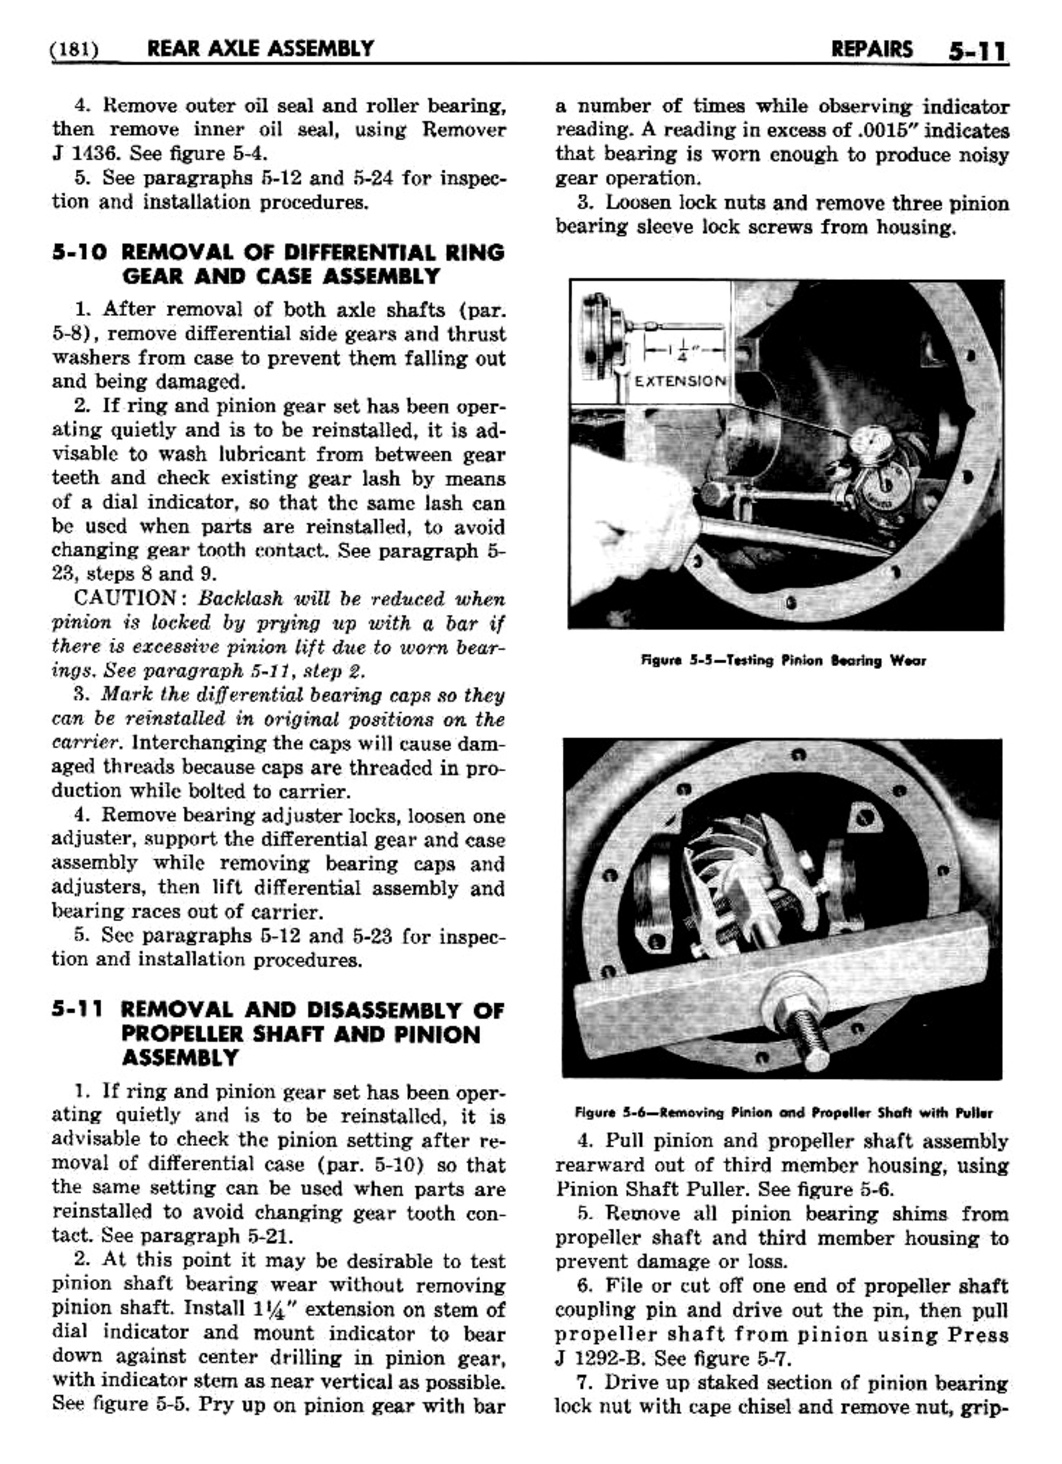 n_06 1948 Buick Shop Manual - Rear Axle-011-011.jpg